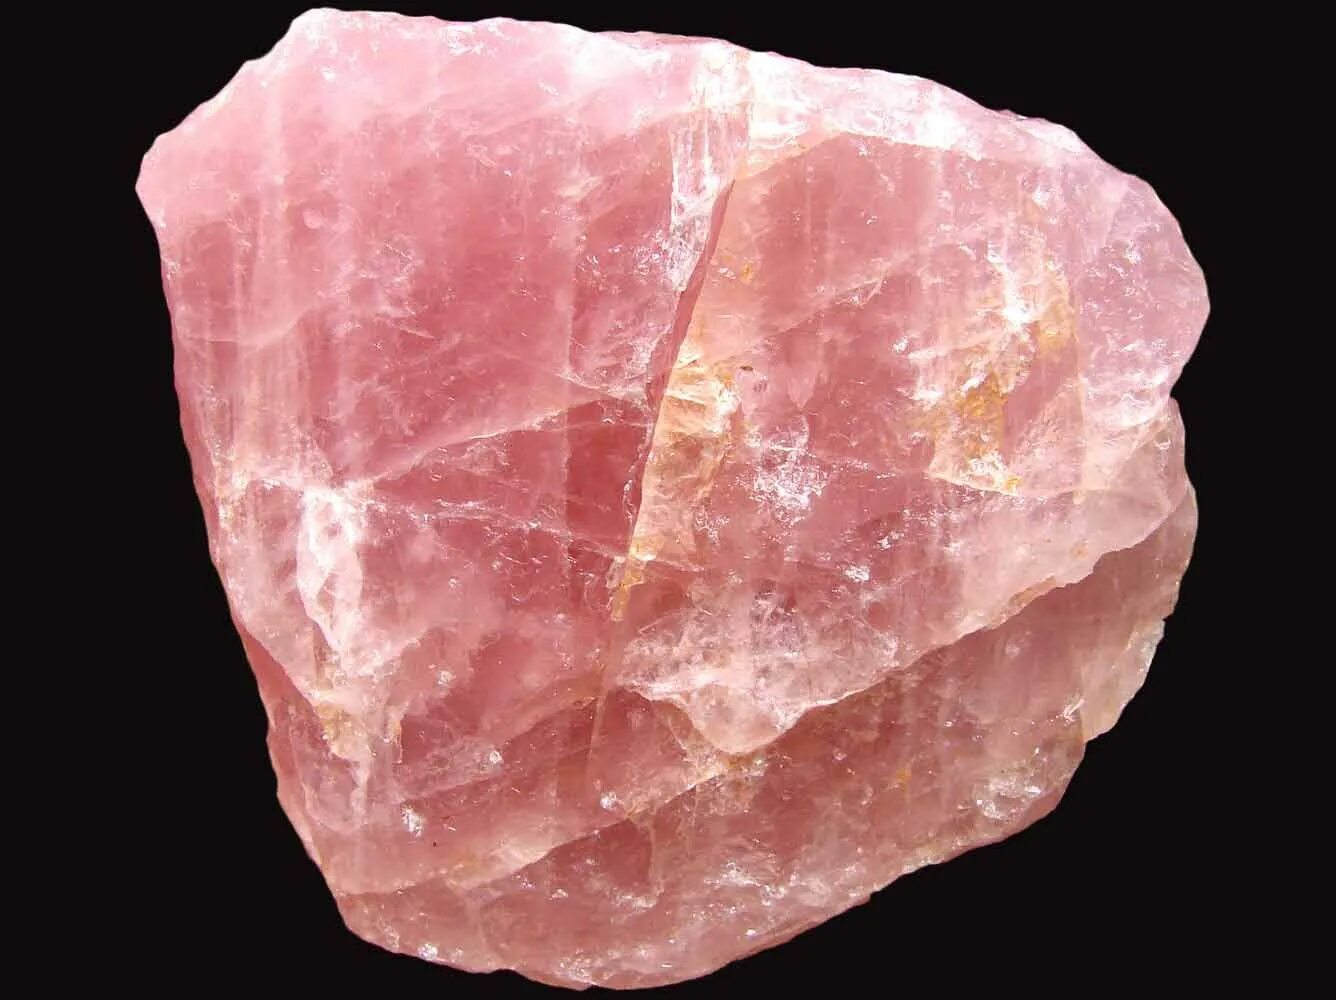 Pink stones. Розовый кварц минерал. Кварцит, кварц камень. Мадагаскарский кварц. Розовый кварц минерал необработанный.